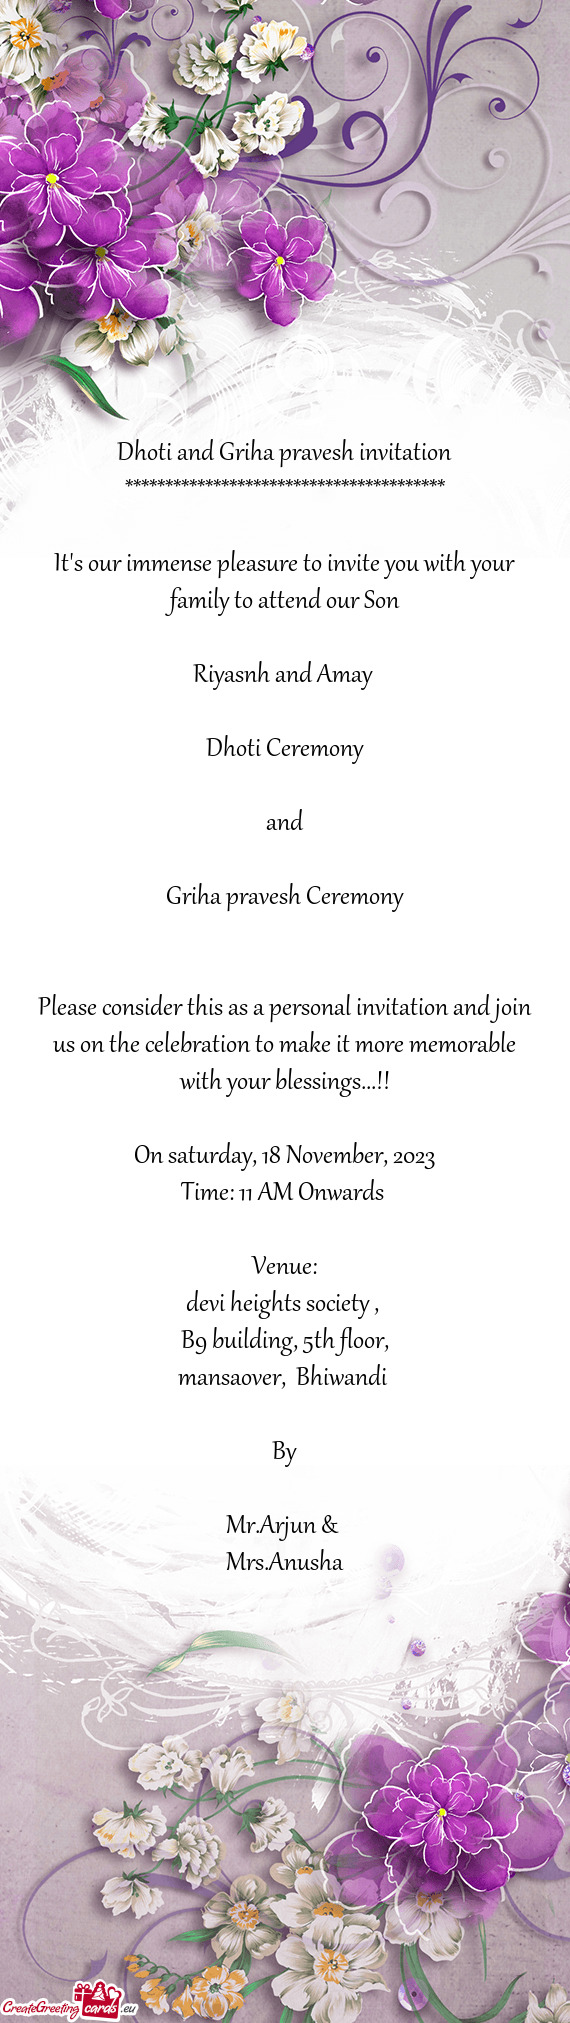 Dhoti and Griha pravesh invitation